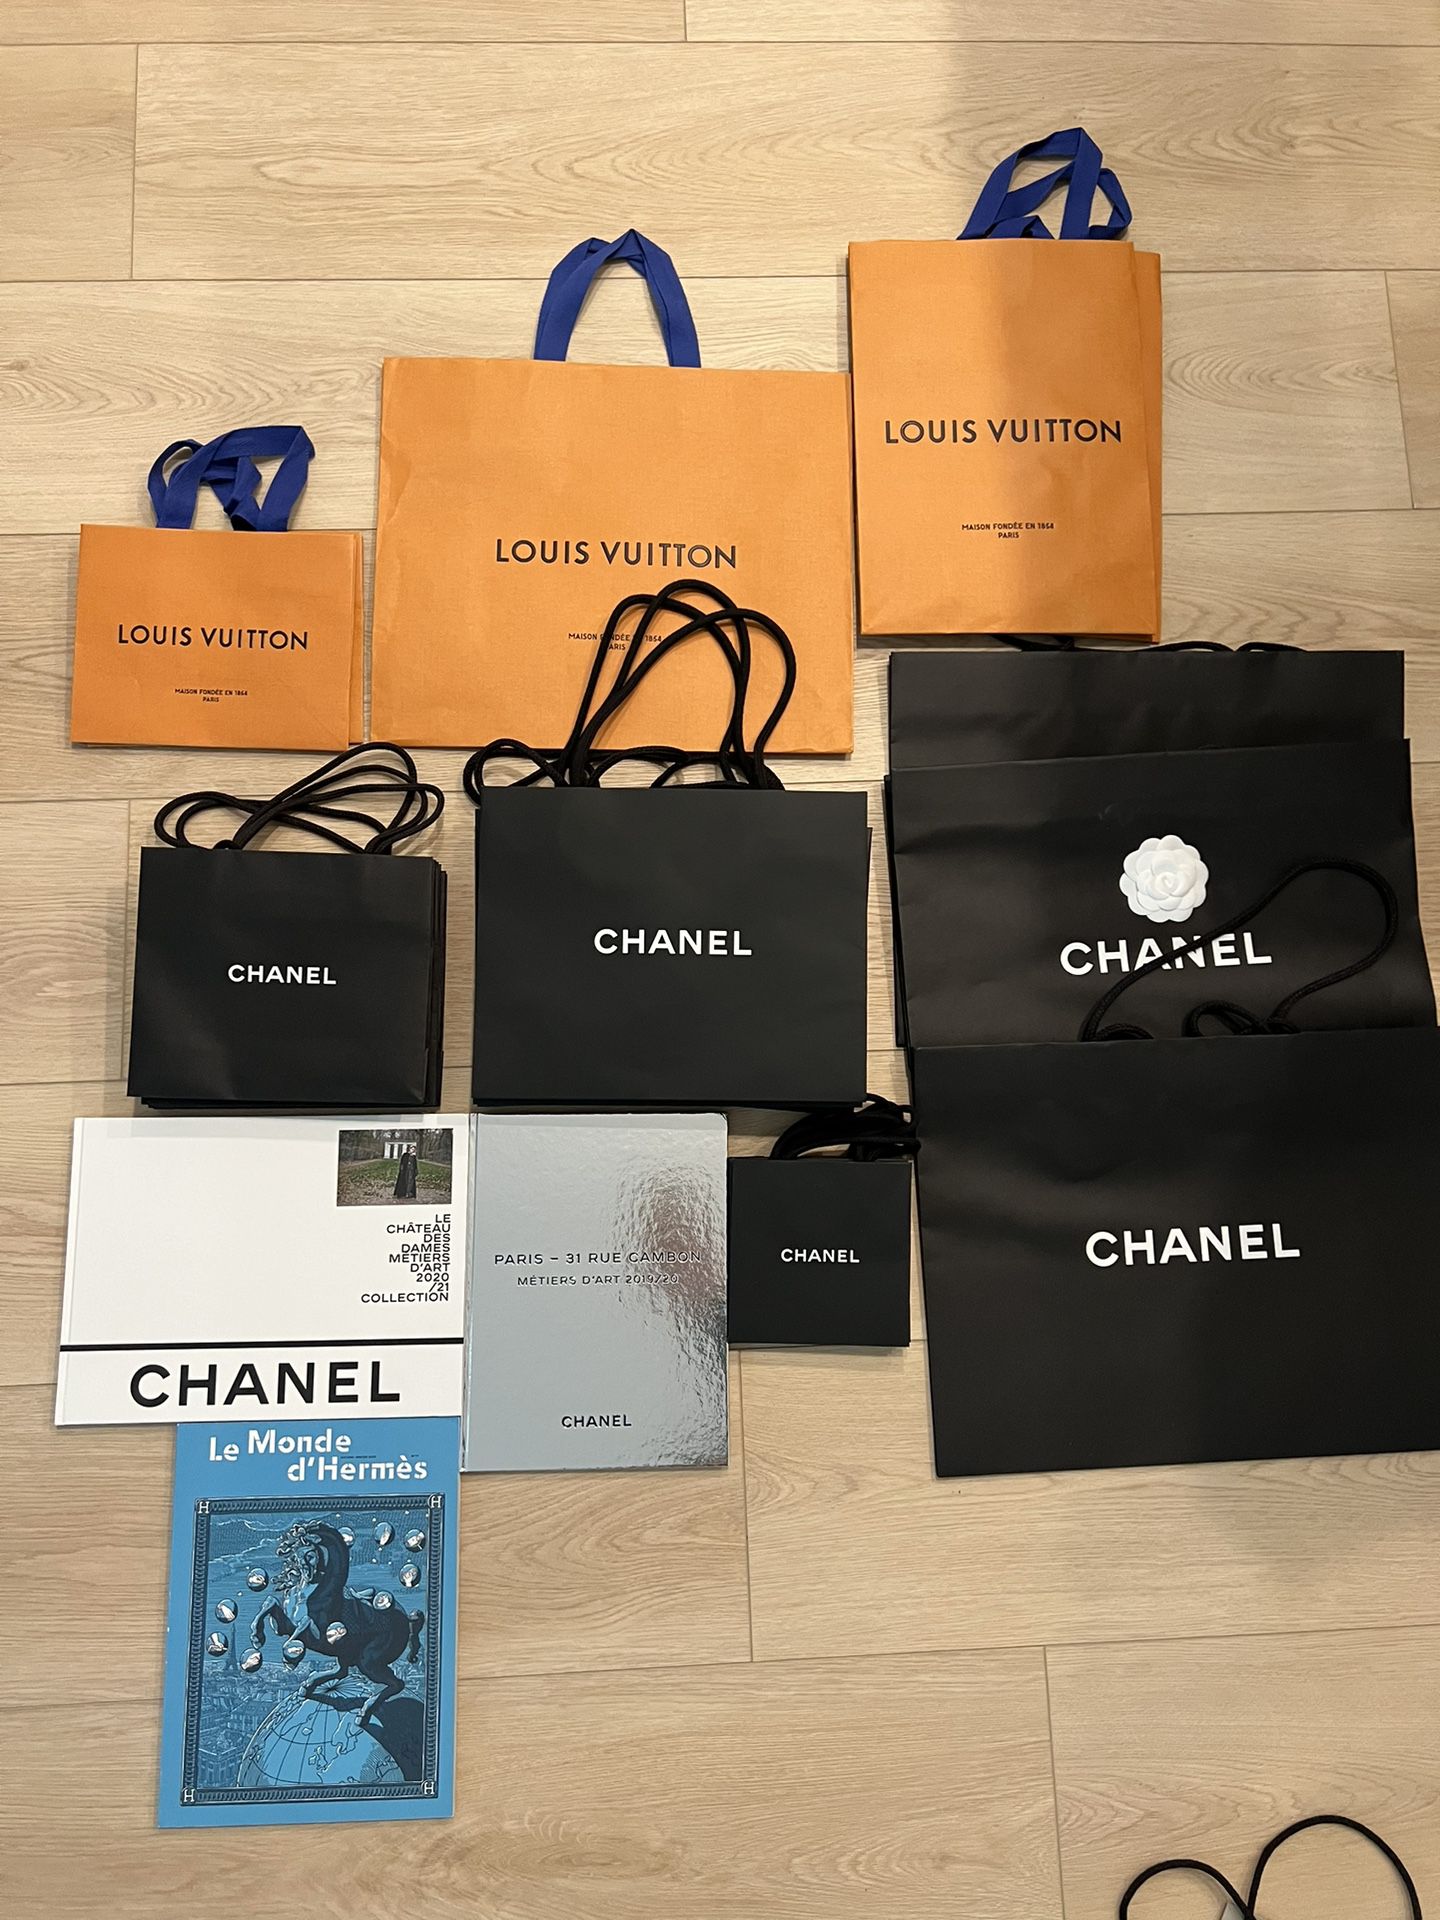 Chanel & LV Shopping Bags Books